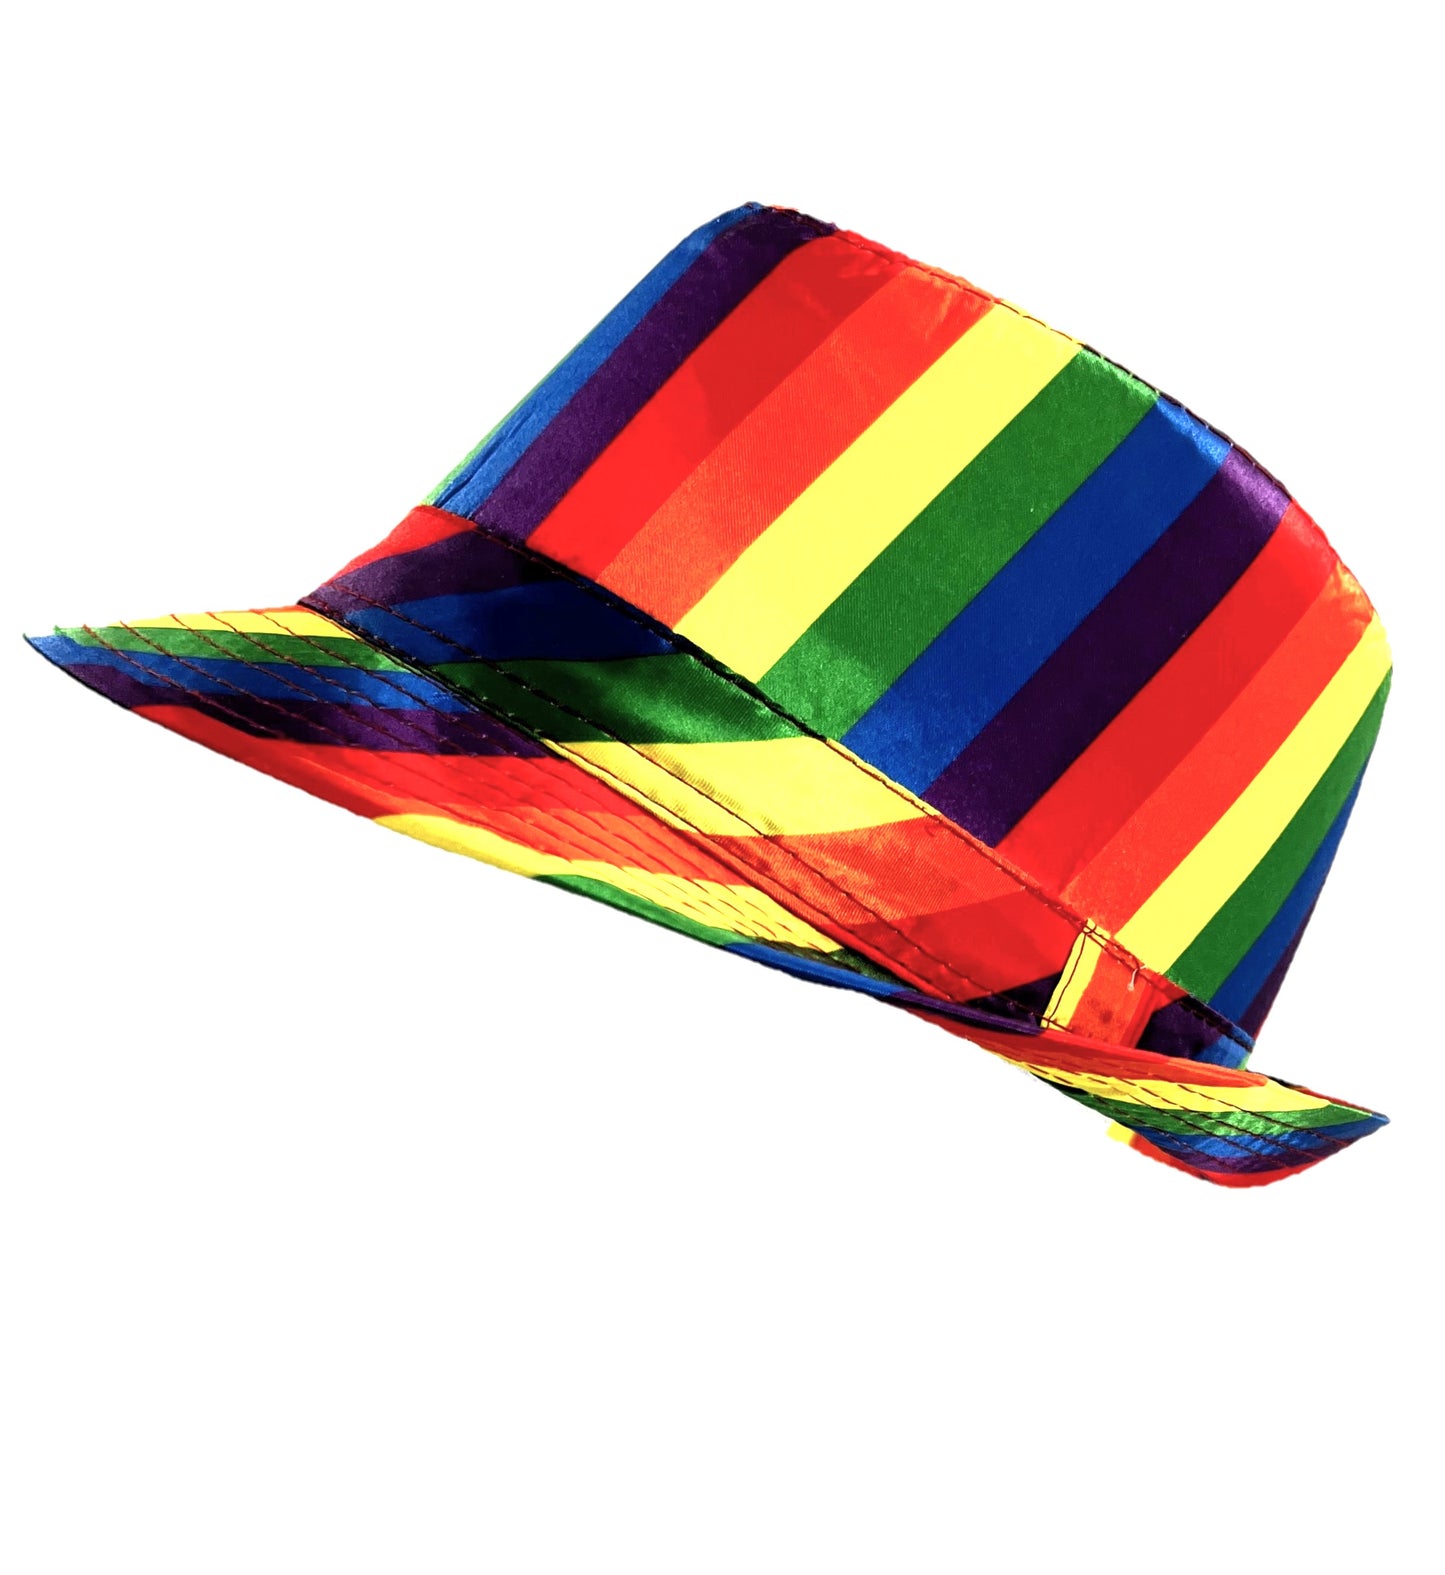 Pride Festival Party Hat, Choose Bucket, Trilby Gangster or Cowboy Pride LGBT